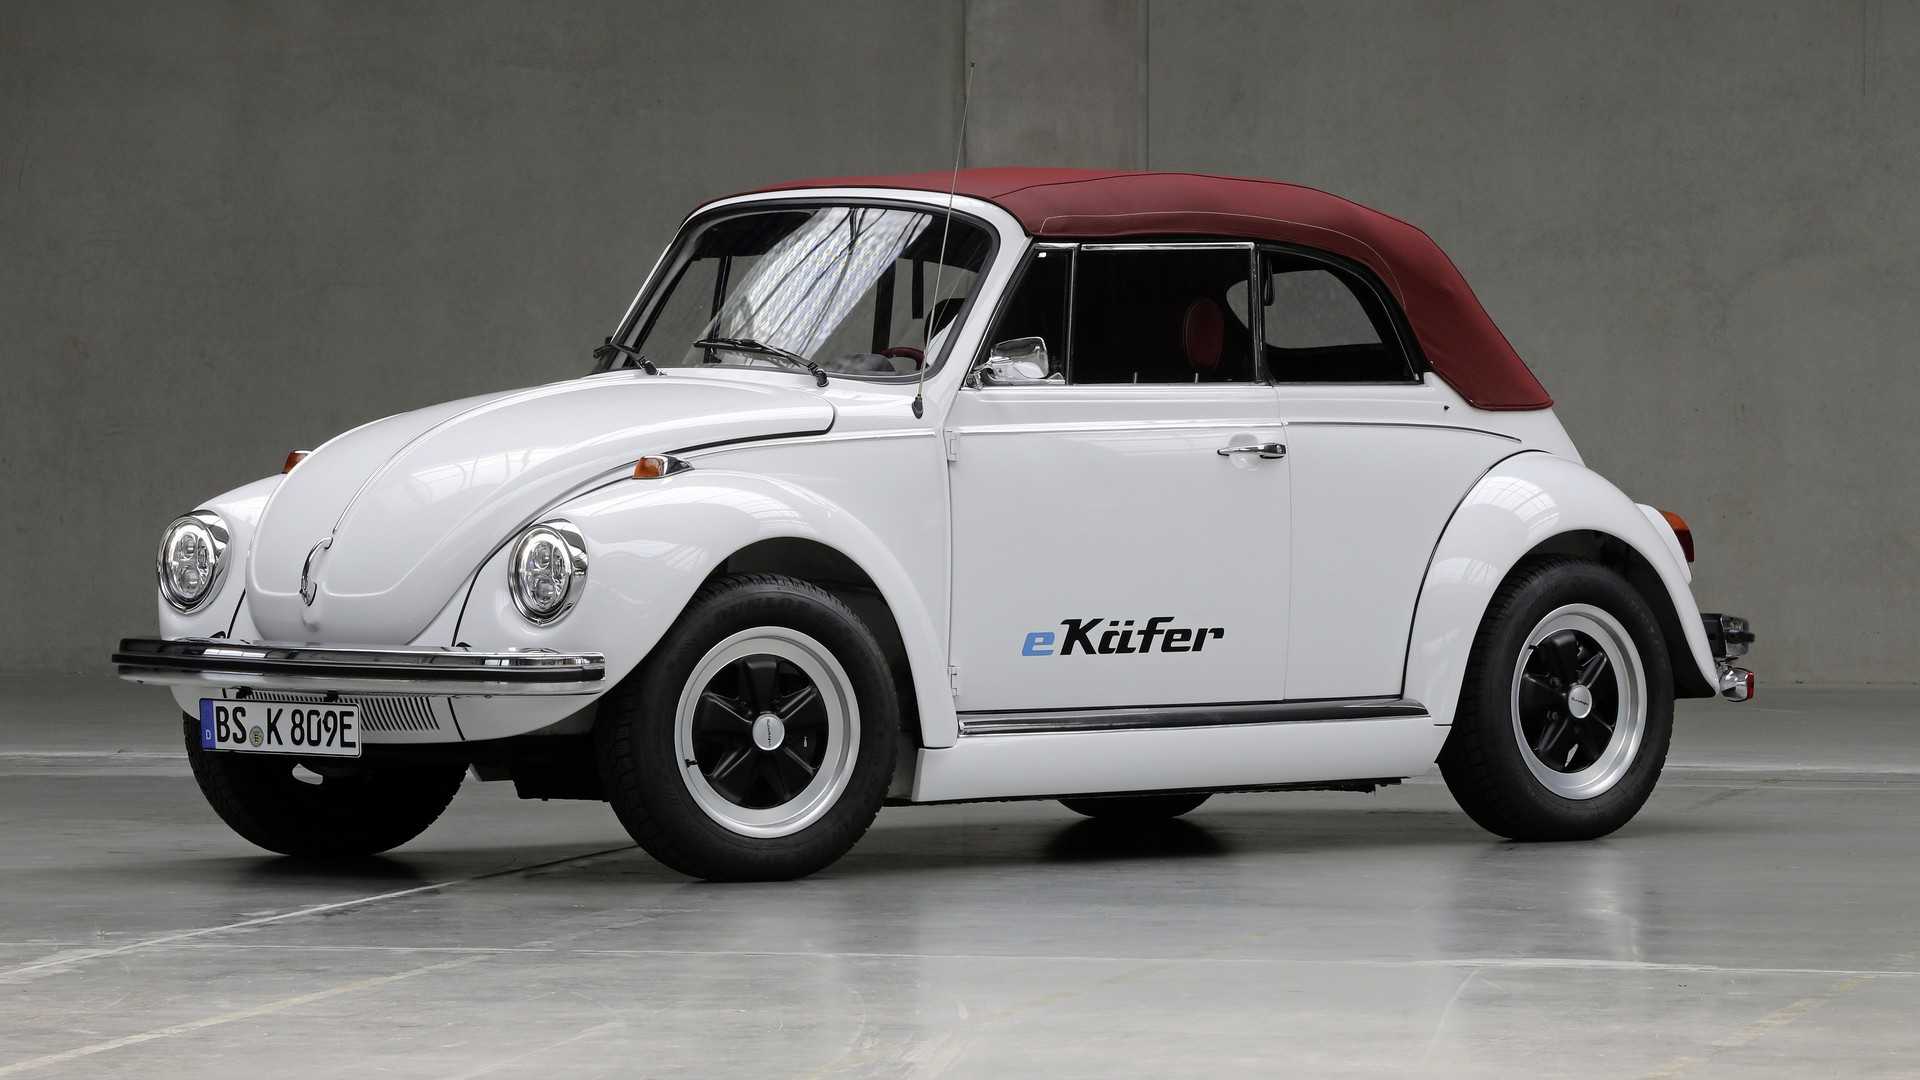 H VW θα εξηλεκτρίσει και άλλα ιστορικά μοντέλα της εκτός του Beetle Cabrio.